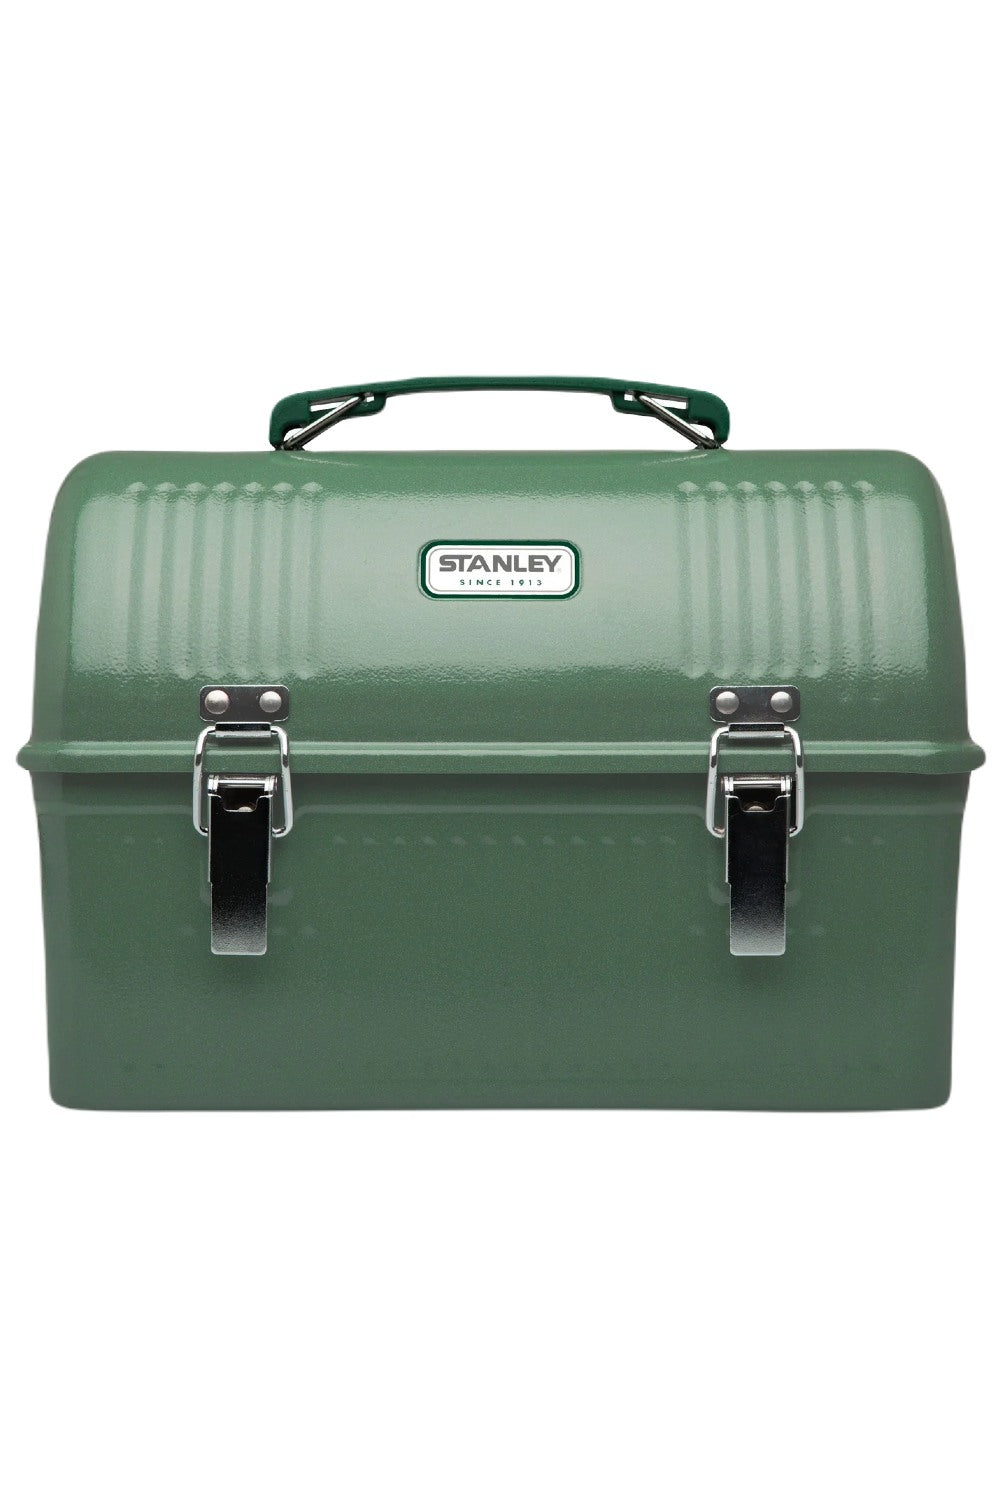 Stanley Legendary Classic Lunch Box 9.5L in Hammertone Green